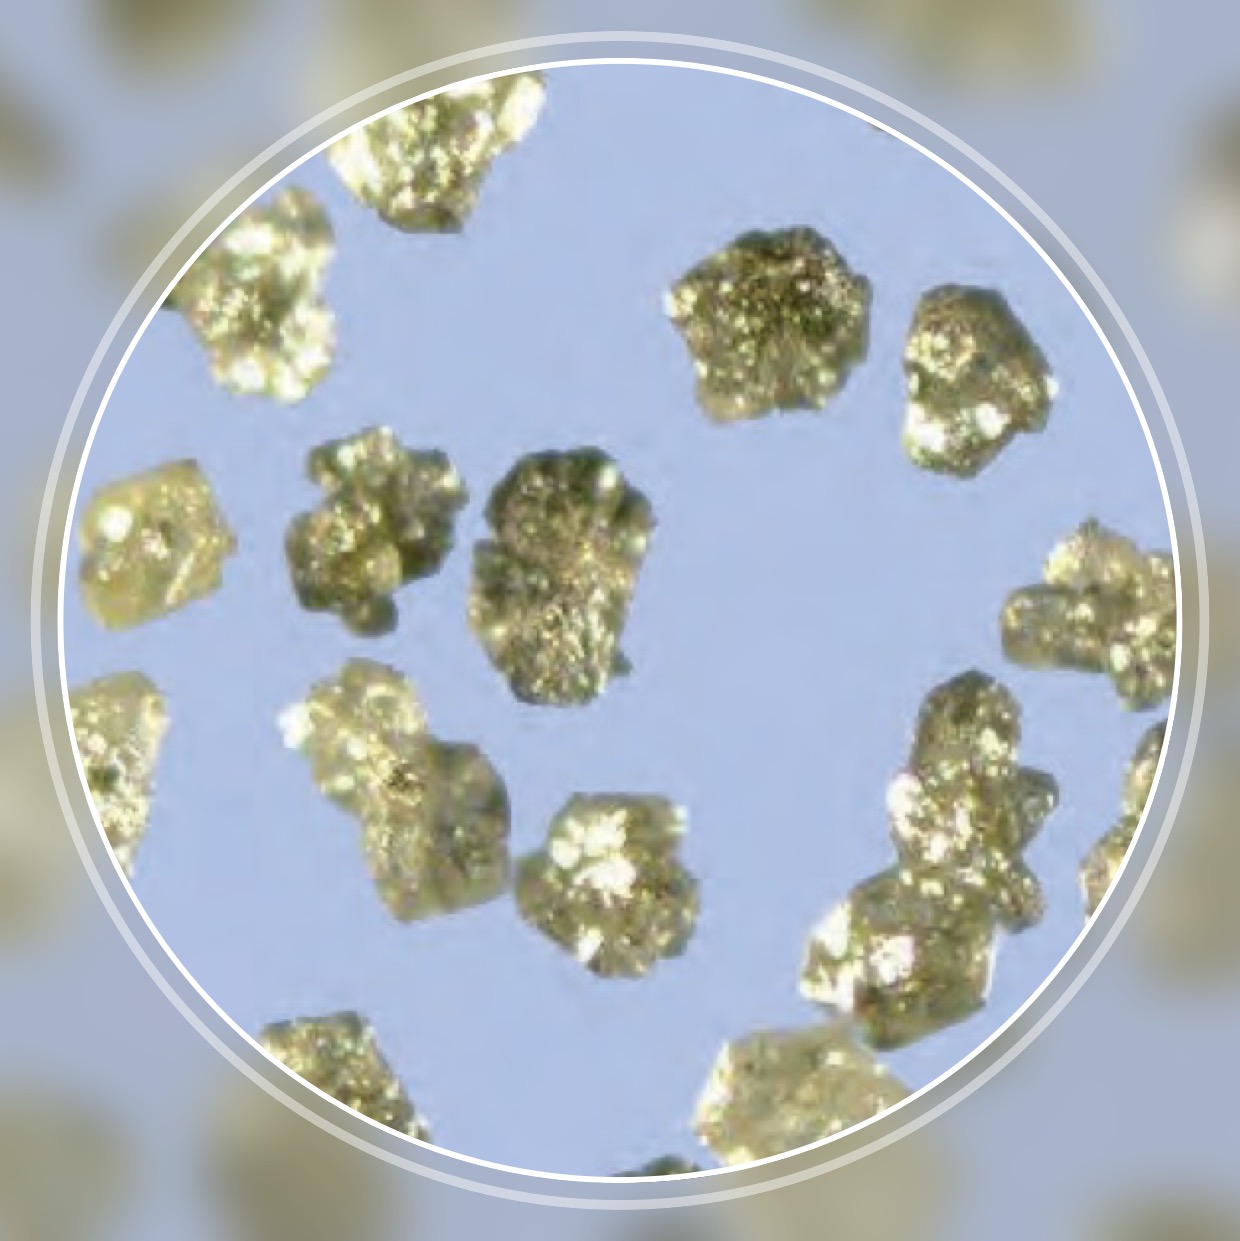 SND-R10 Economy Grade Semi-Blocky Resin Bond Diamond With a High Friability Featured Image